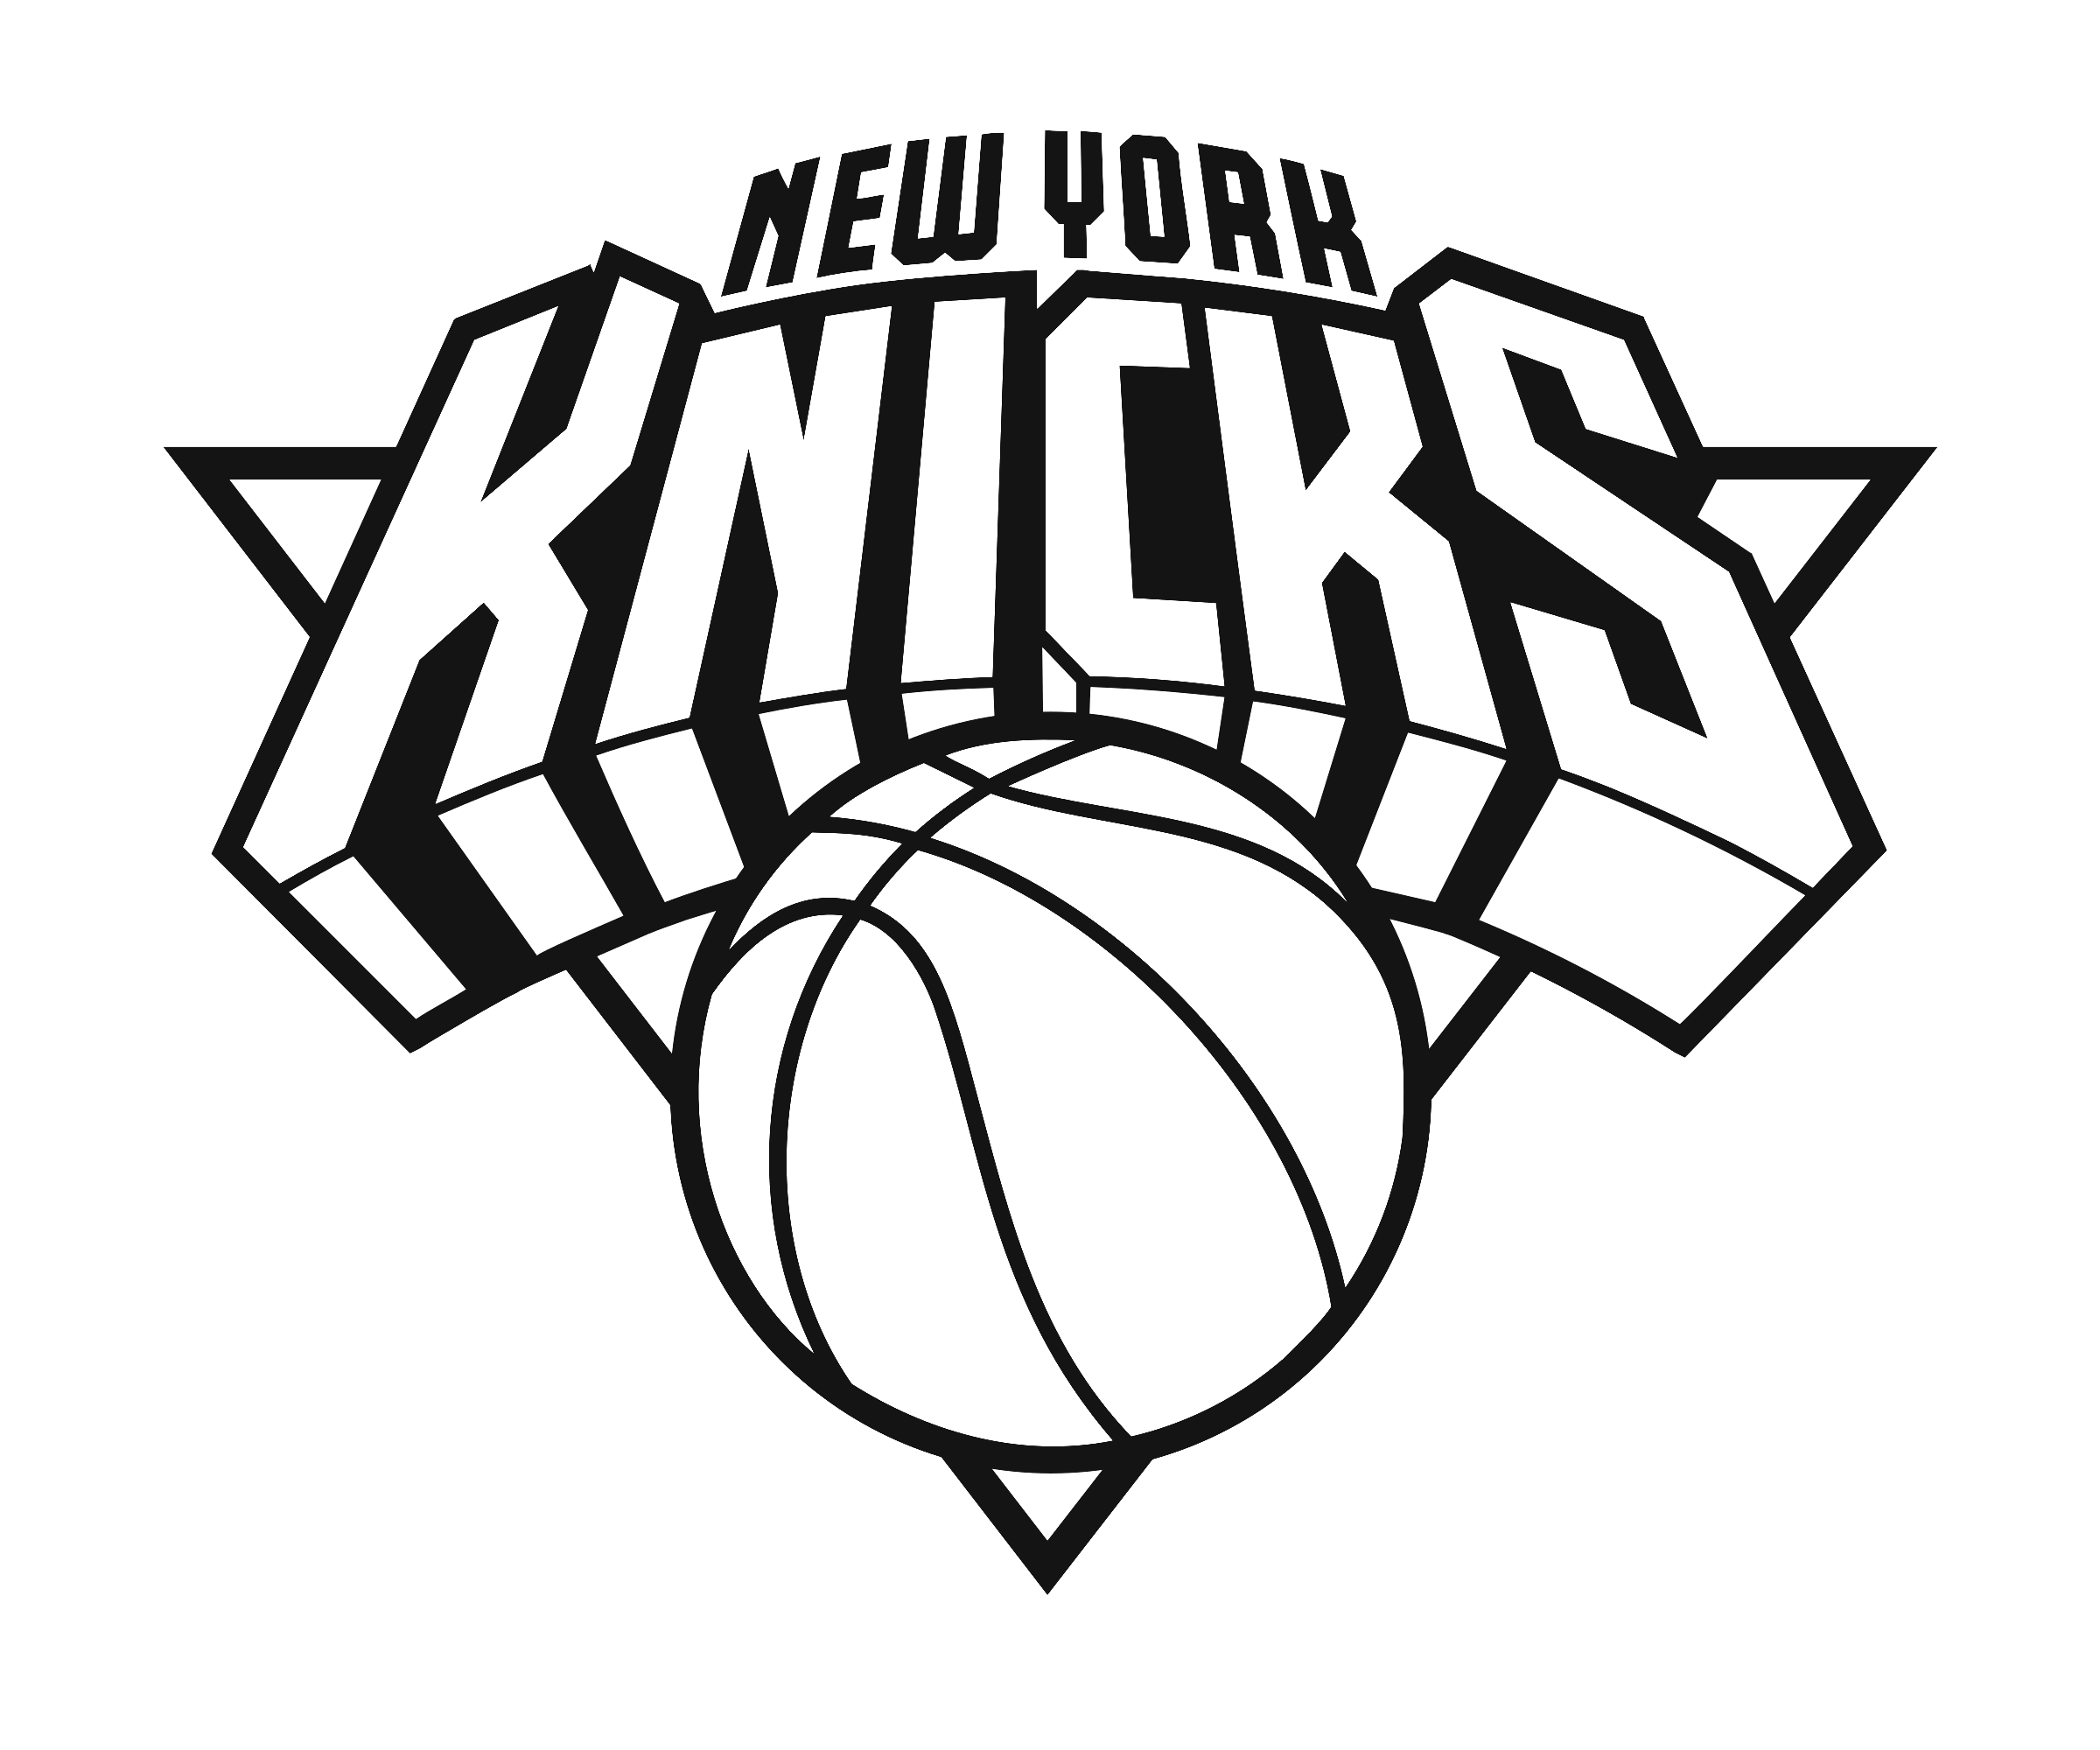 New York Knicks Logo - New York Knicks Logo PNG Transparent & SVG Vector - Freebie Supply